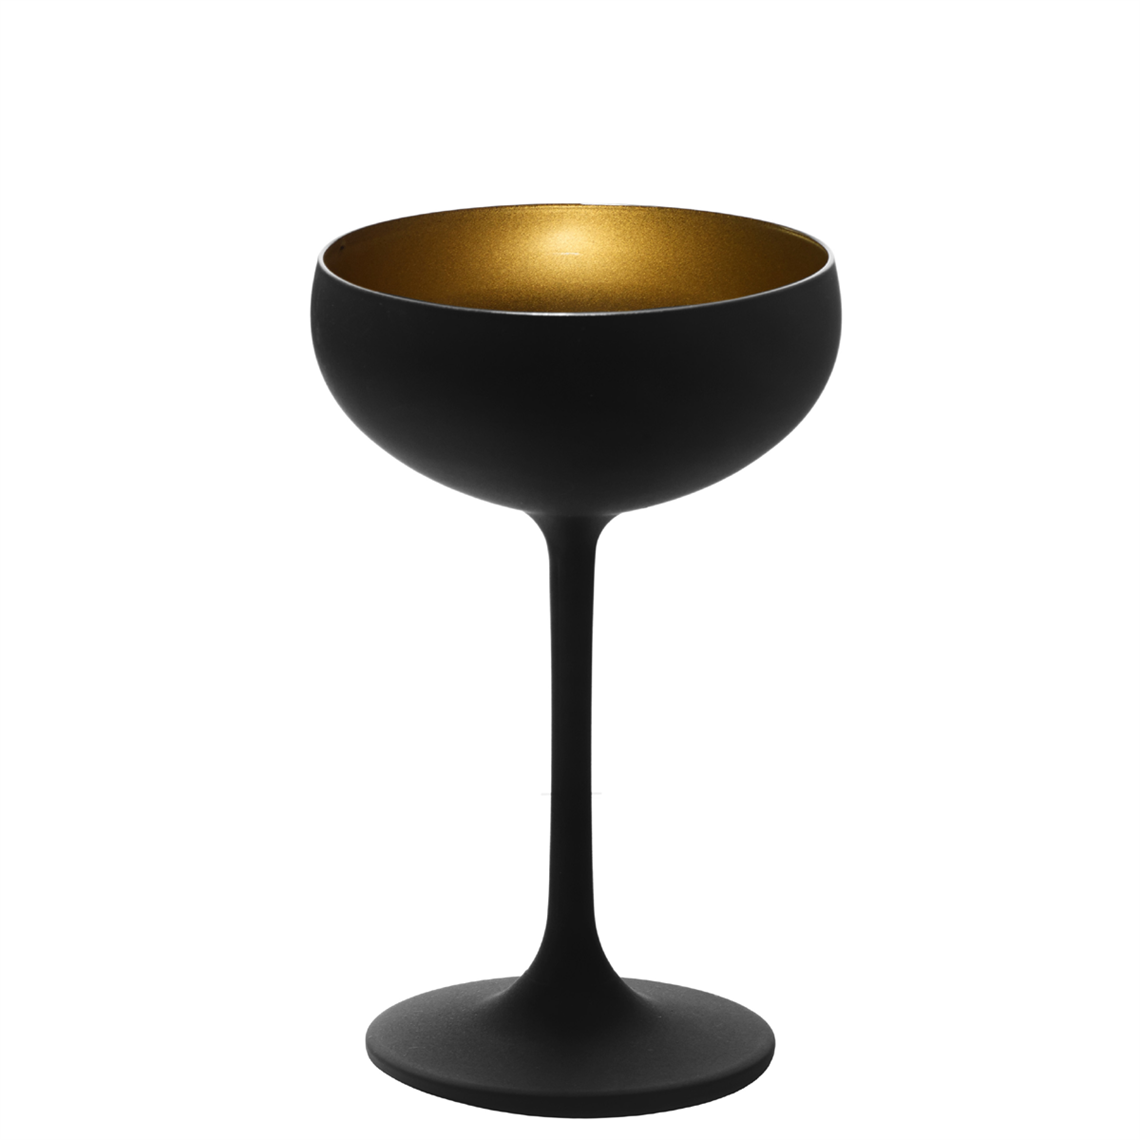 Stolzle Elements Champagne Coupe/Saucer - Black & Gold - Set of 6